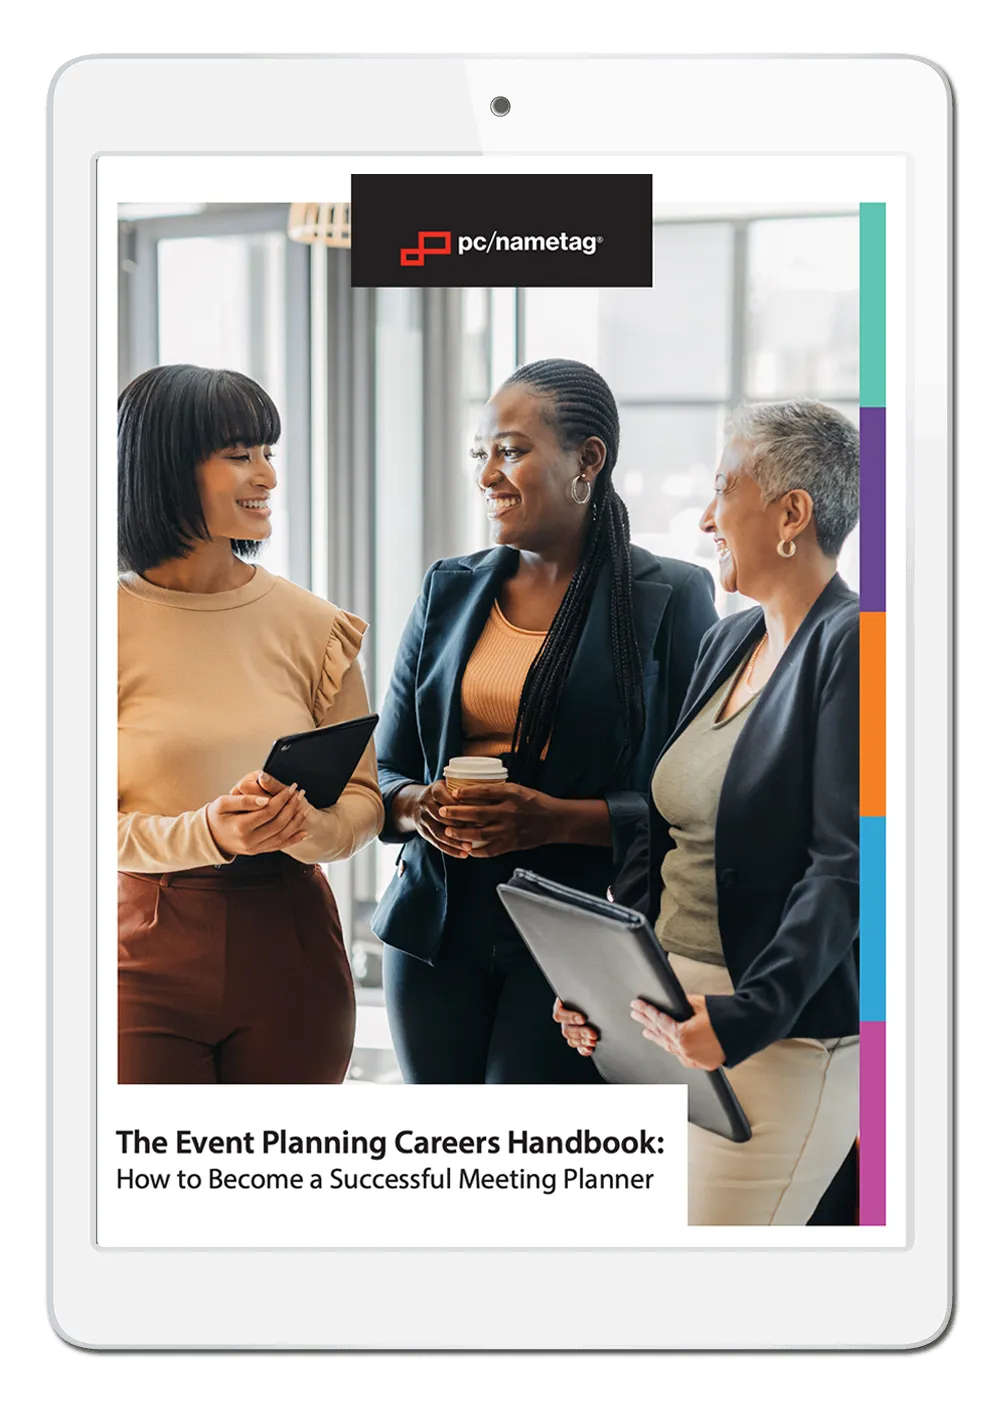 The Event Planning Careers Handbook - Free Digital Guide